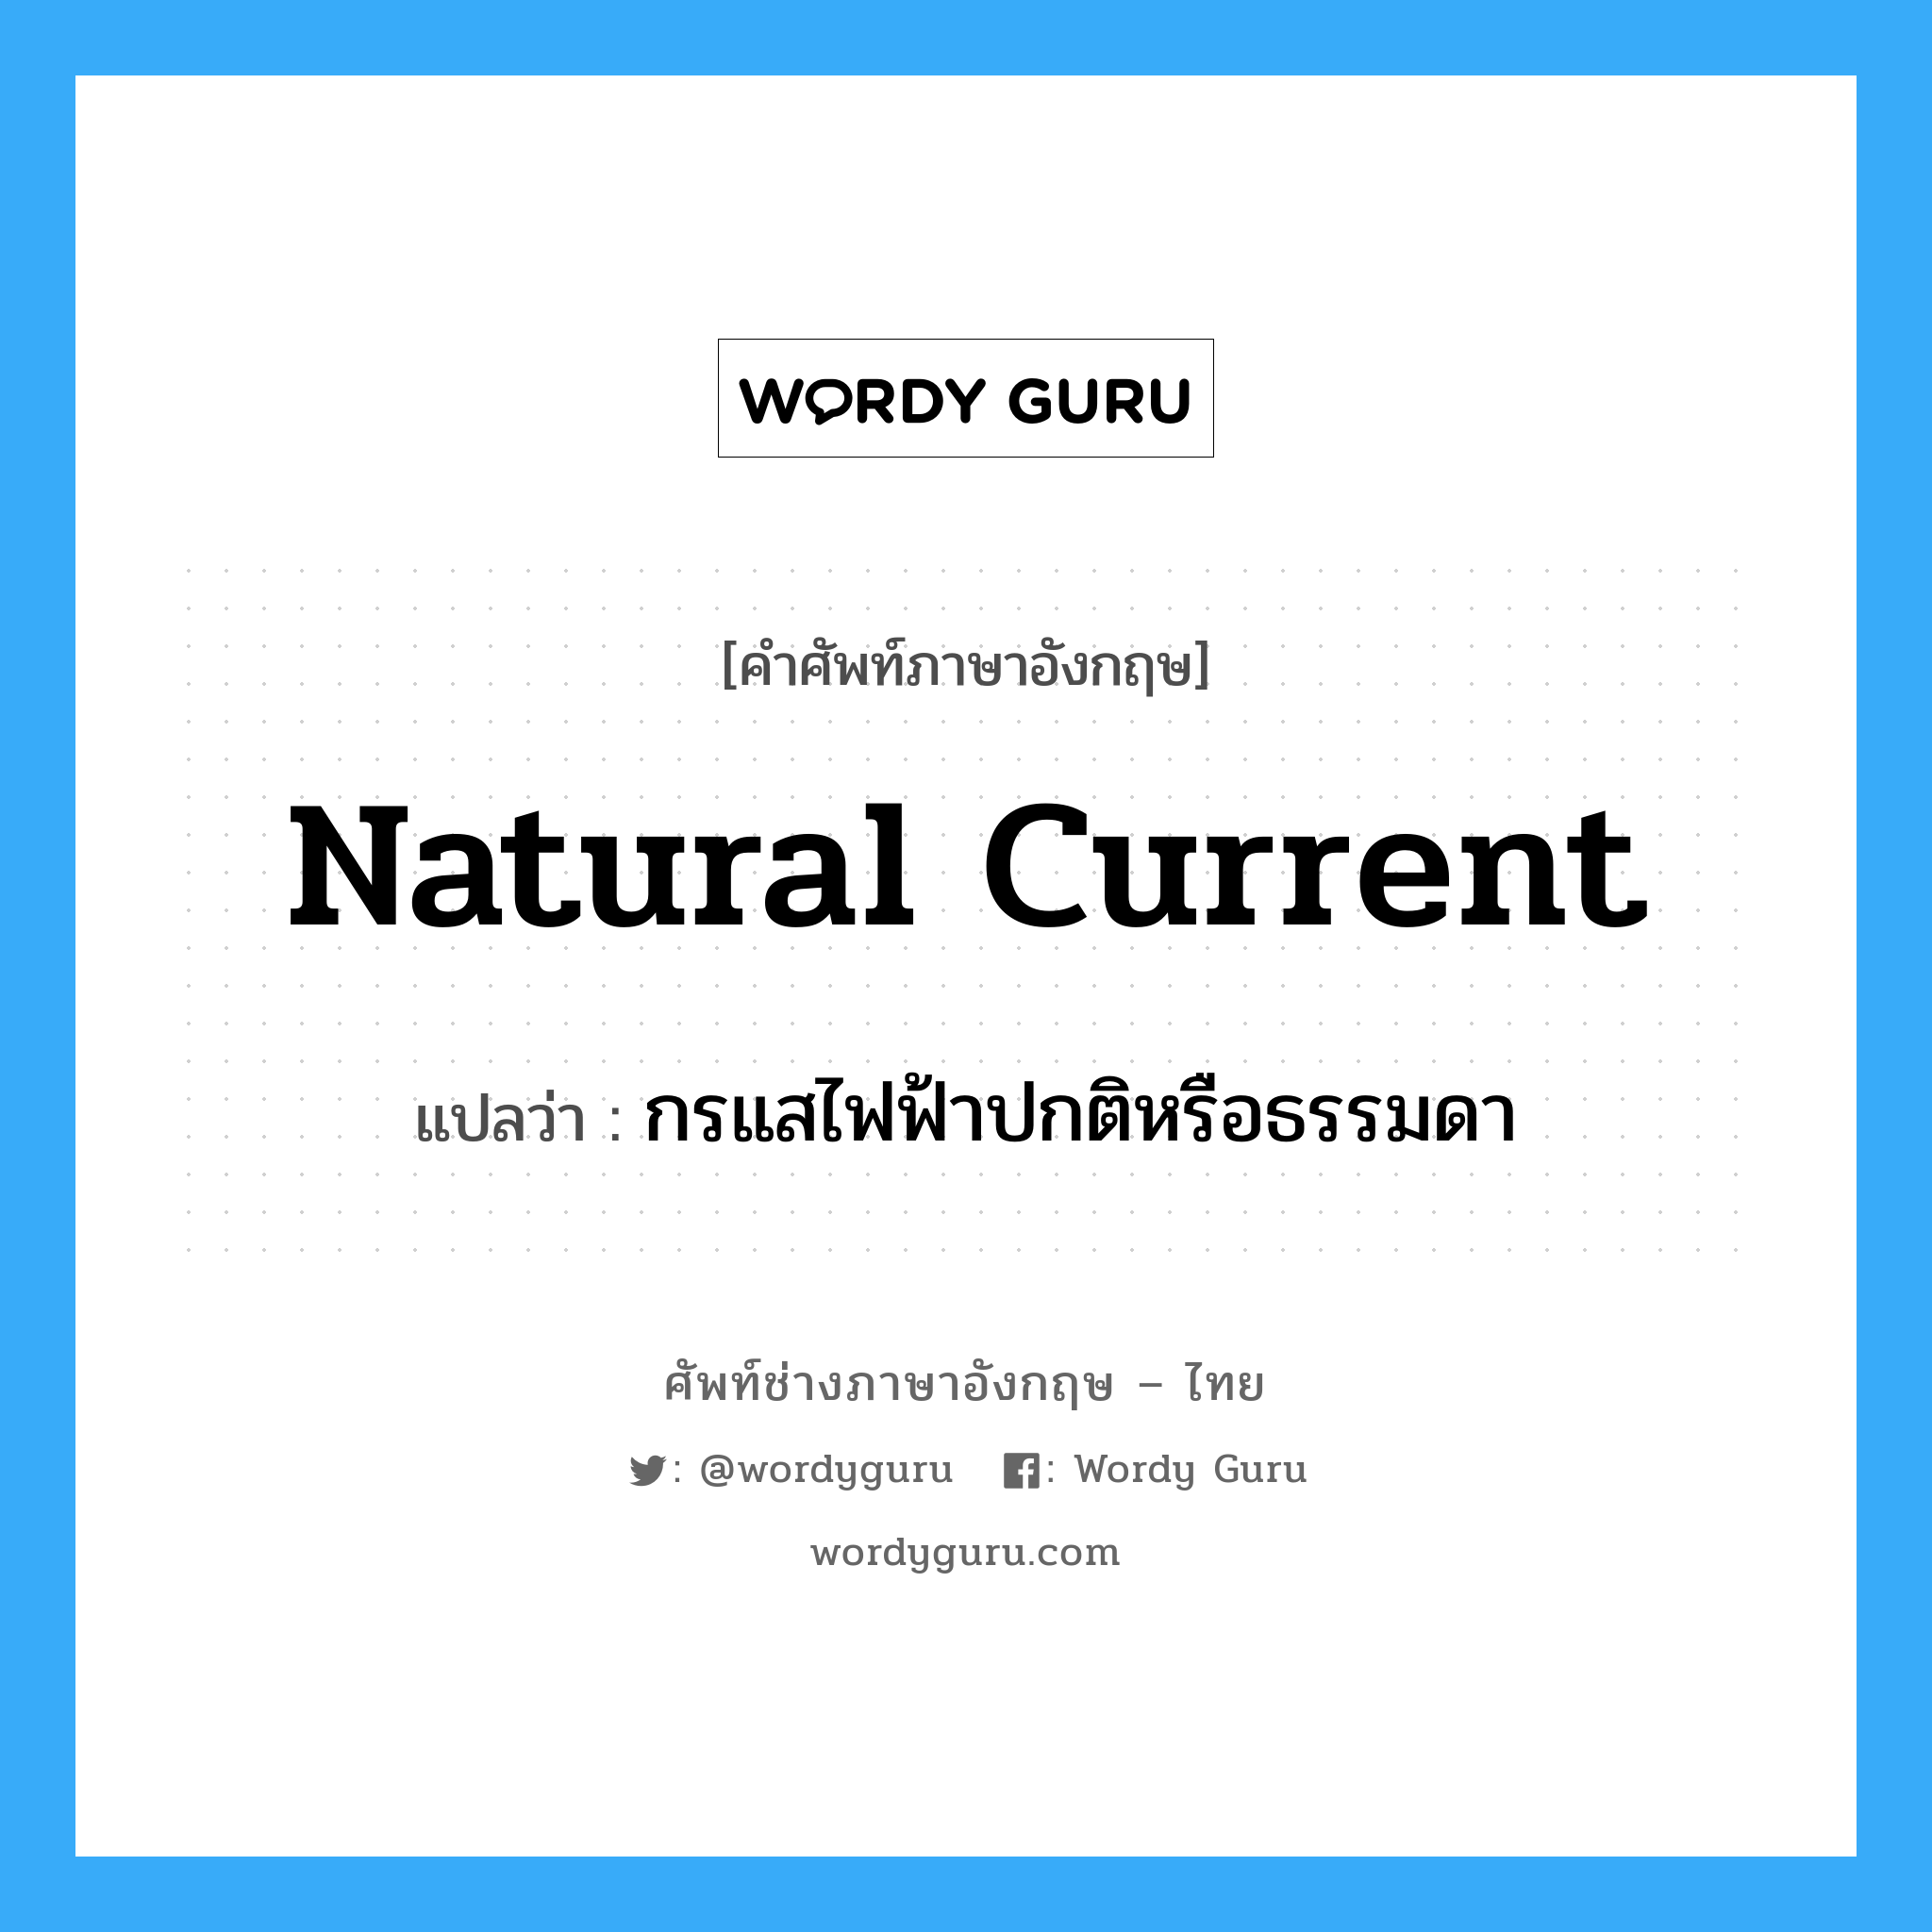 natural current แปลว่า?, คำศัพท์ช่างภาษาอังกฤษ - ไทย natural current คำศัพท์ภาษาอังกฤษ natural current แปลว่า กรแสไฟฟ้าปกติหรือธรรมดา